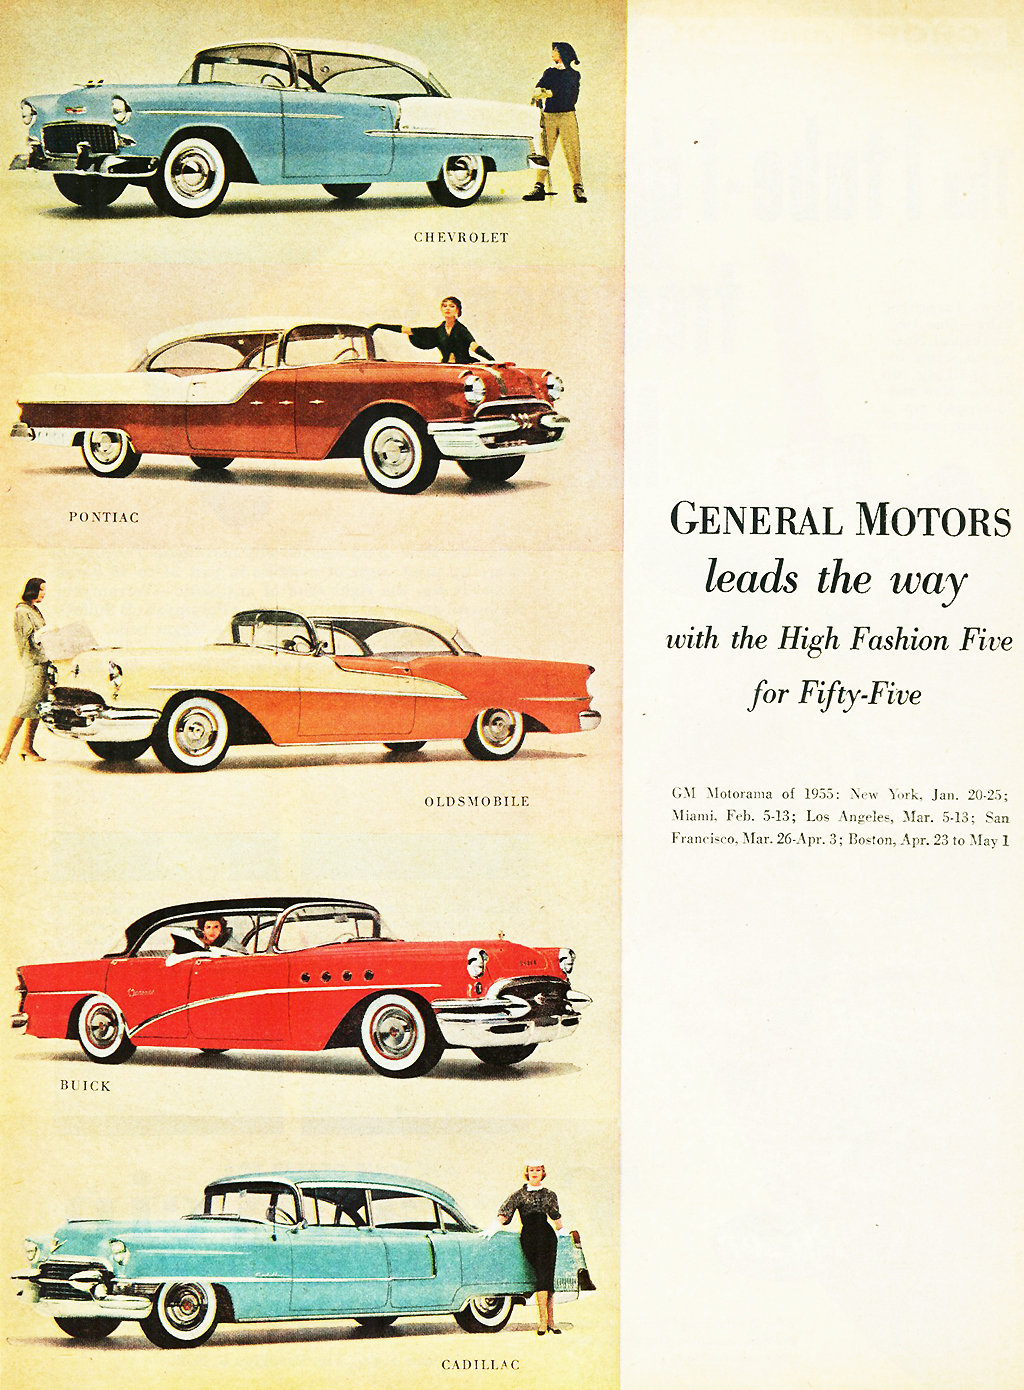 1955 Chevrolet and General Motors models